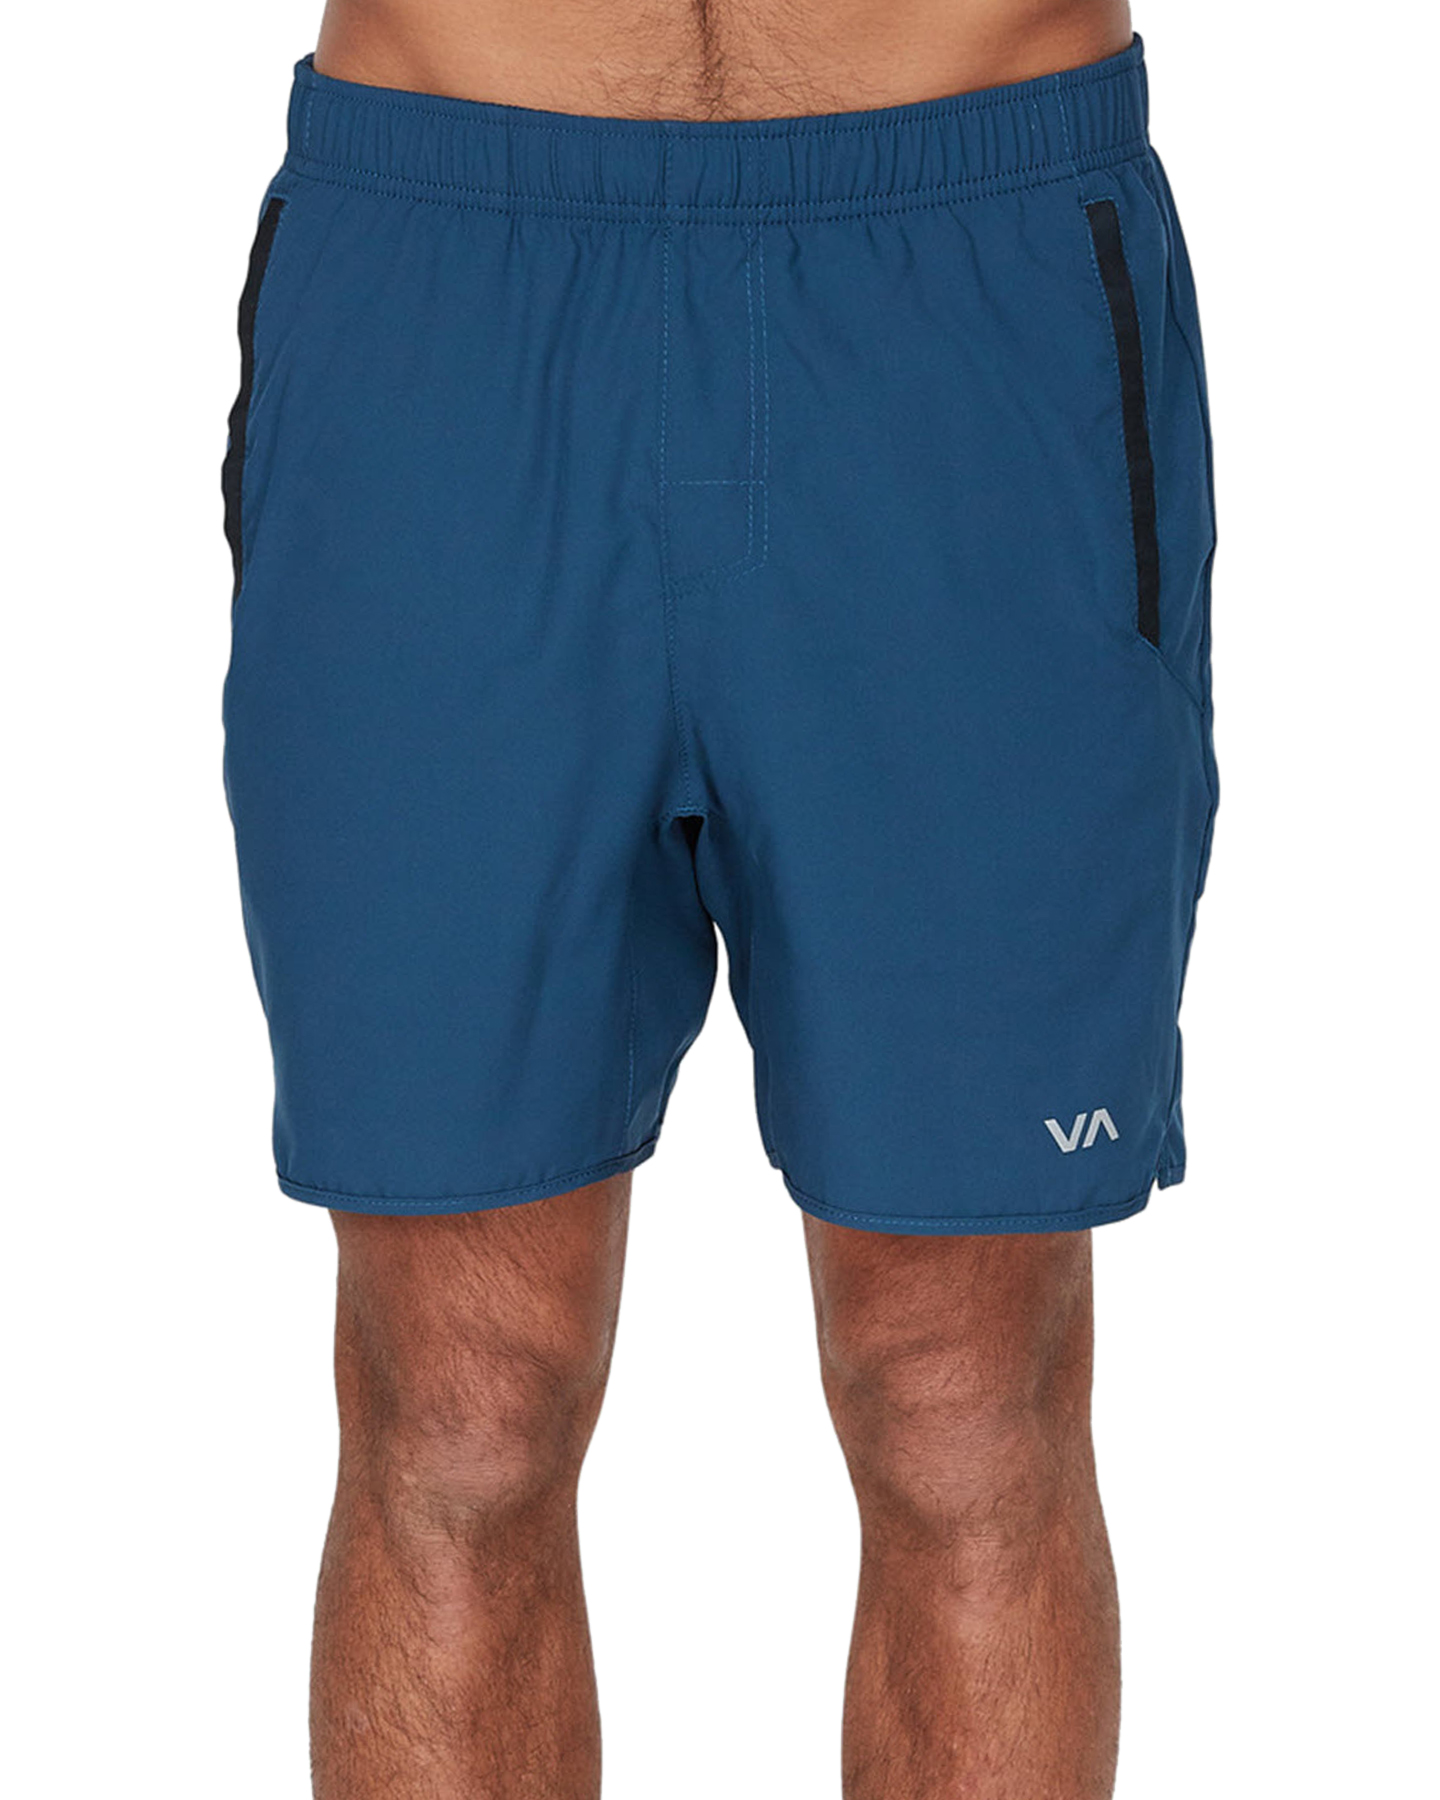 Rvca Shorts Size Chart